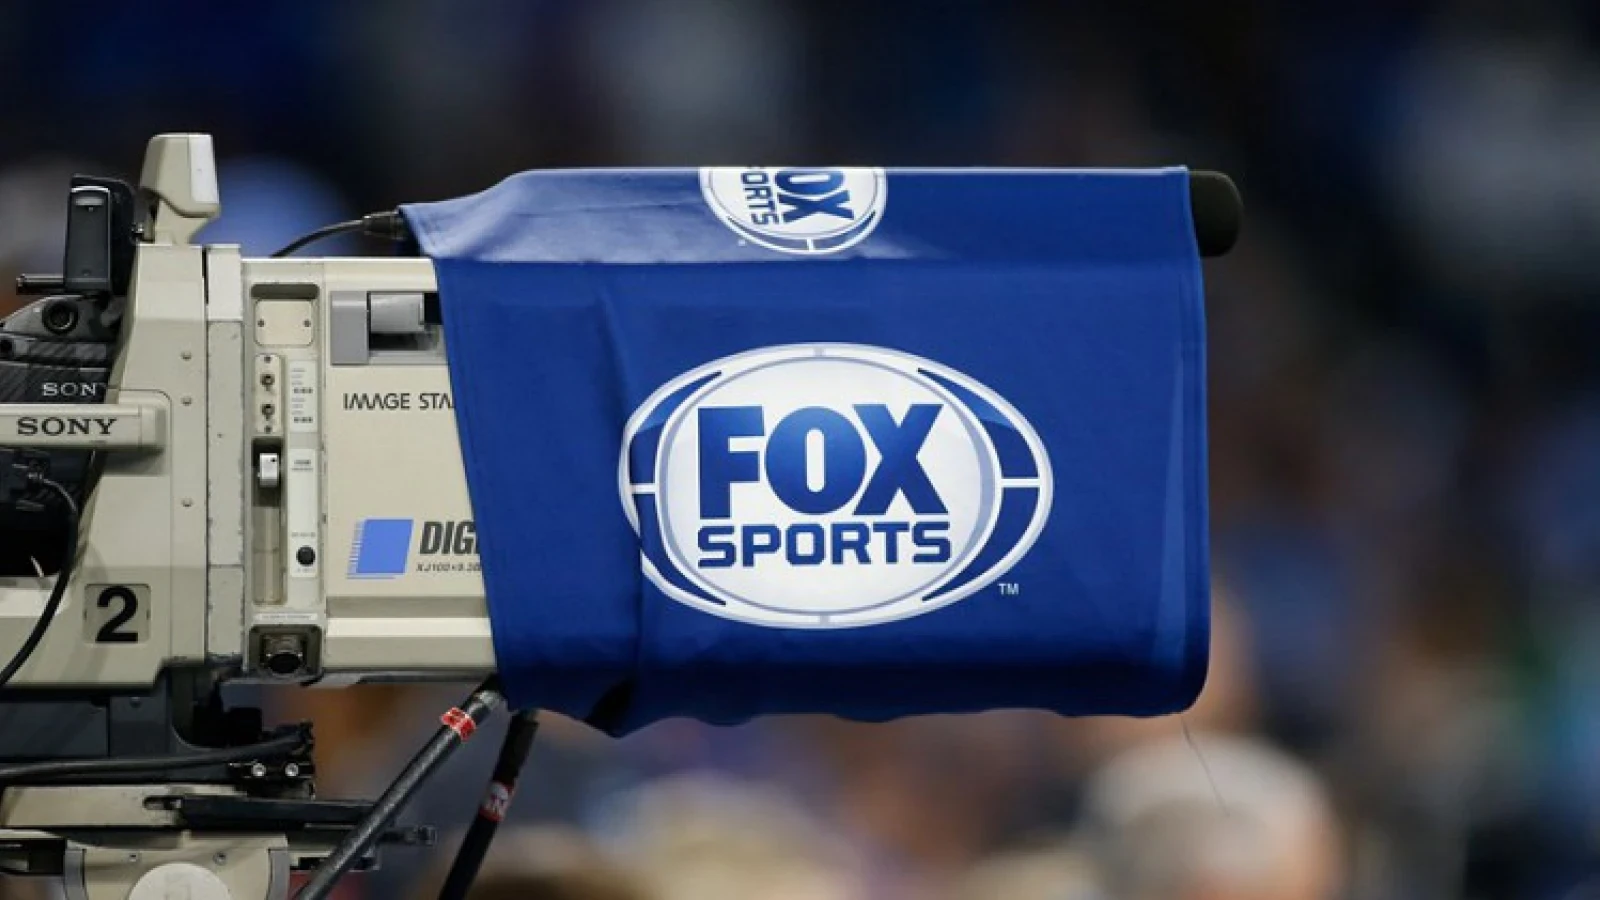 'Geen oefenwedstrijden Feyenoord op Fox Sports'